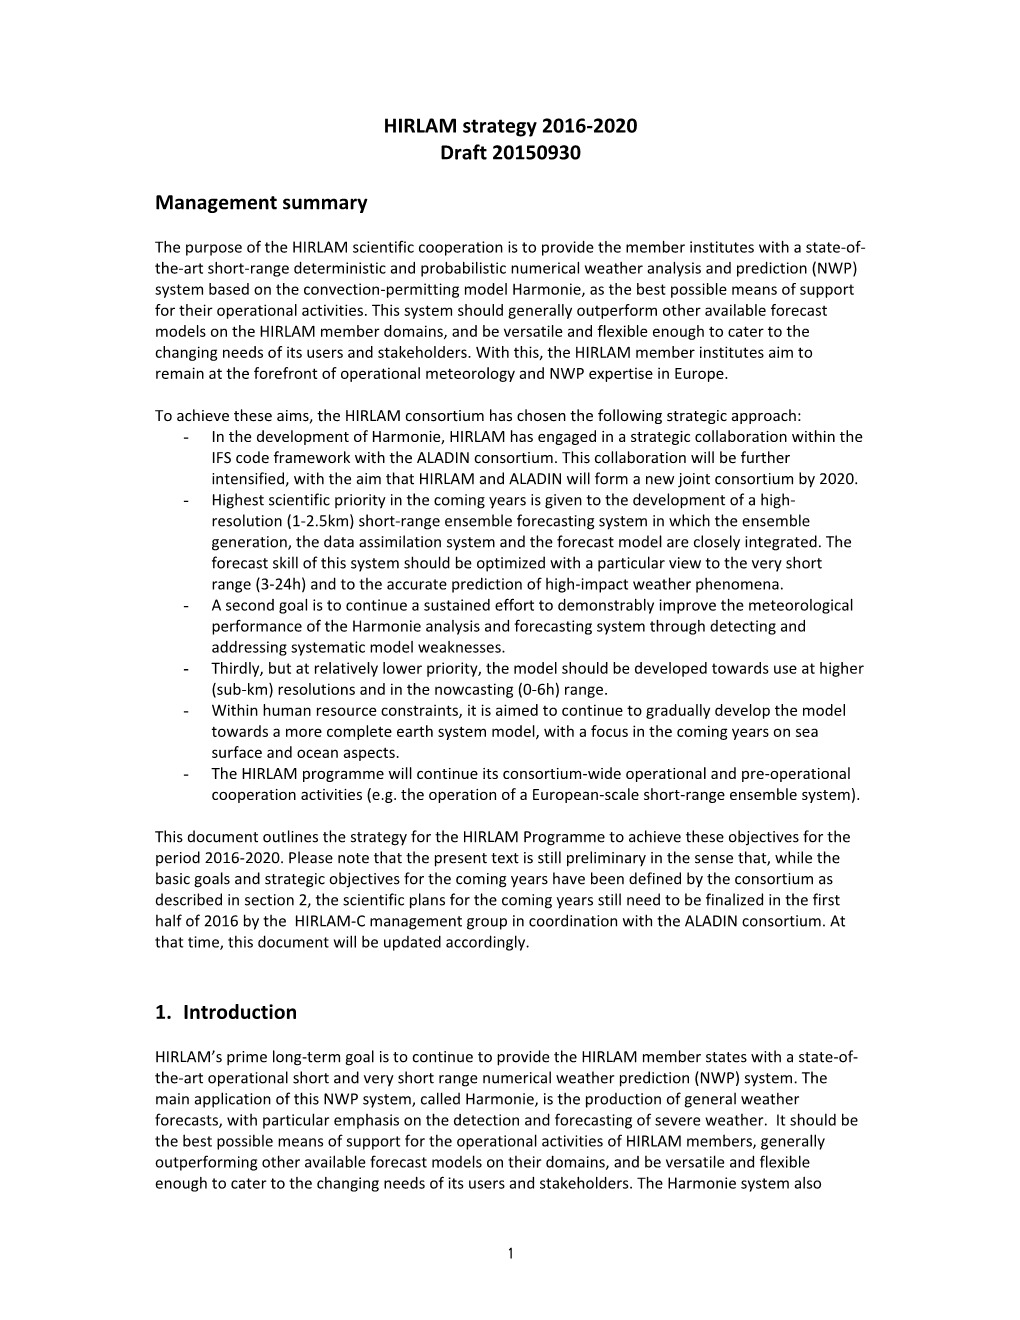 HIRLAM Strategy 2016-2020 Draft 20150930 Management Summary 1